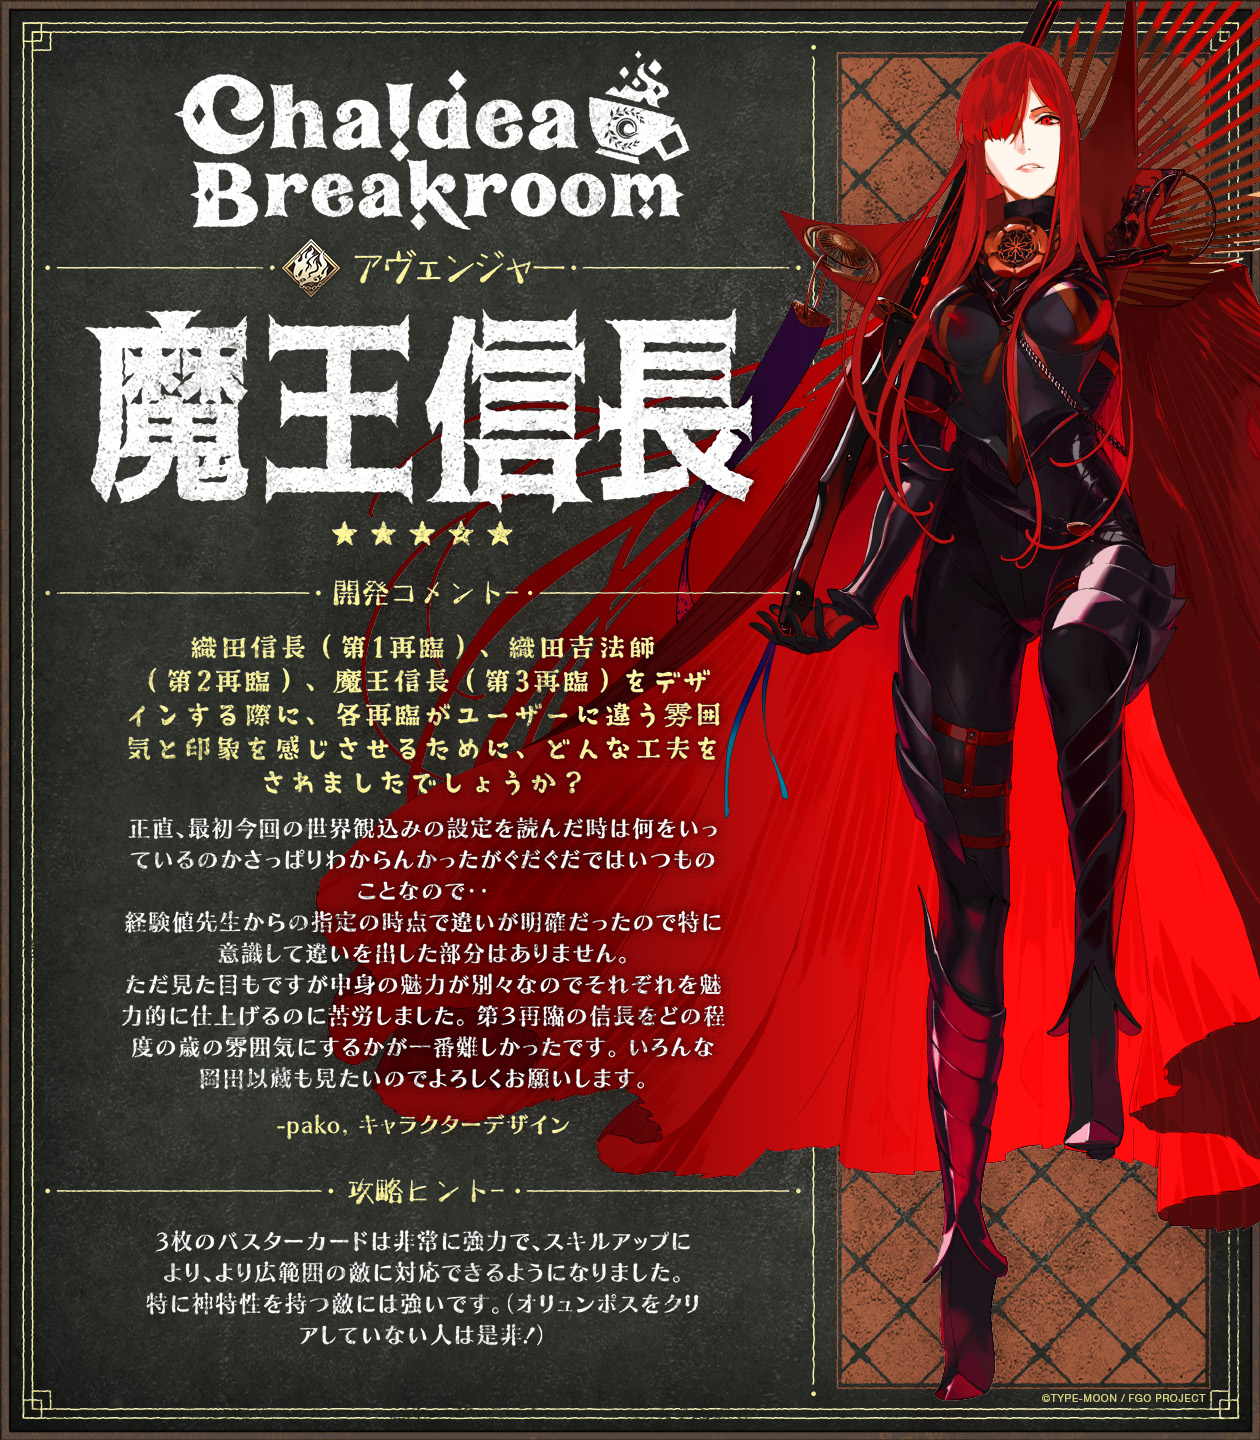 Fate Grand Order Usa Vol 4 Of Chaldea Breakroom Japanese Edition Is Here 特集は魔王信長 織田信長 キャラクターデザインを務めるpakoさんのコメントもご紹介 インタビューは開発スタッフ プロジェクトマネジメントです Chaldeabreakroom